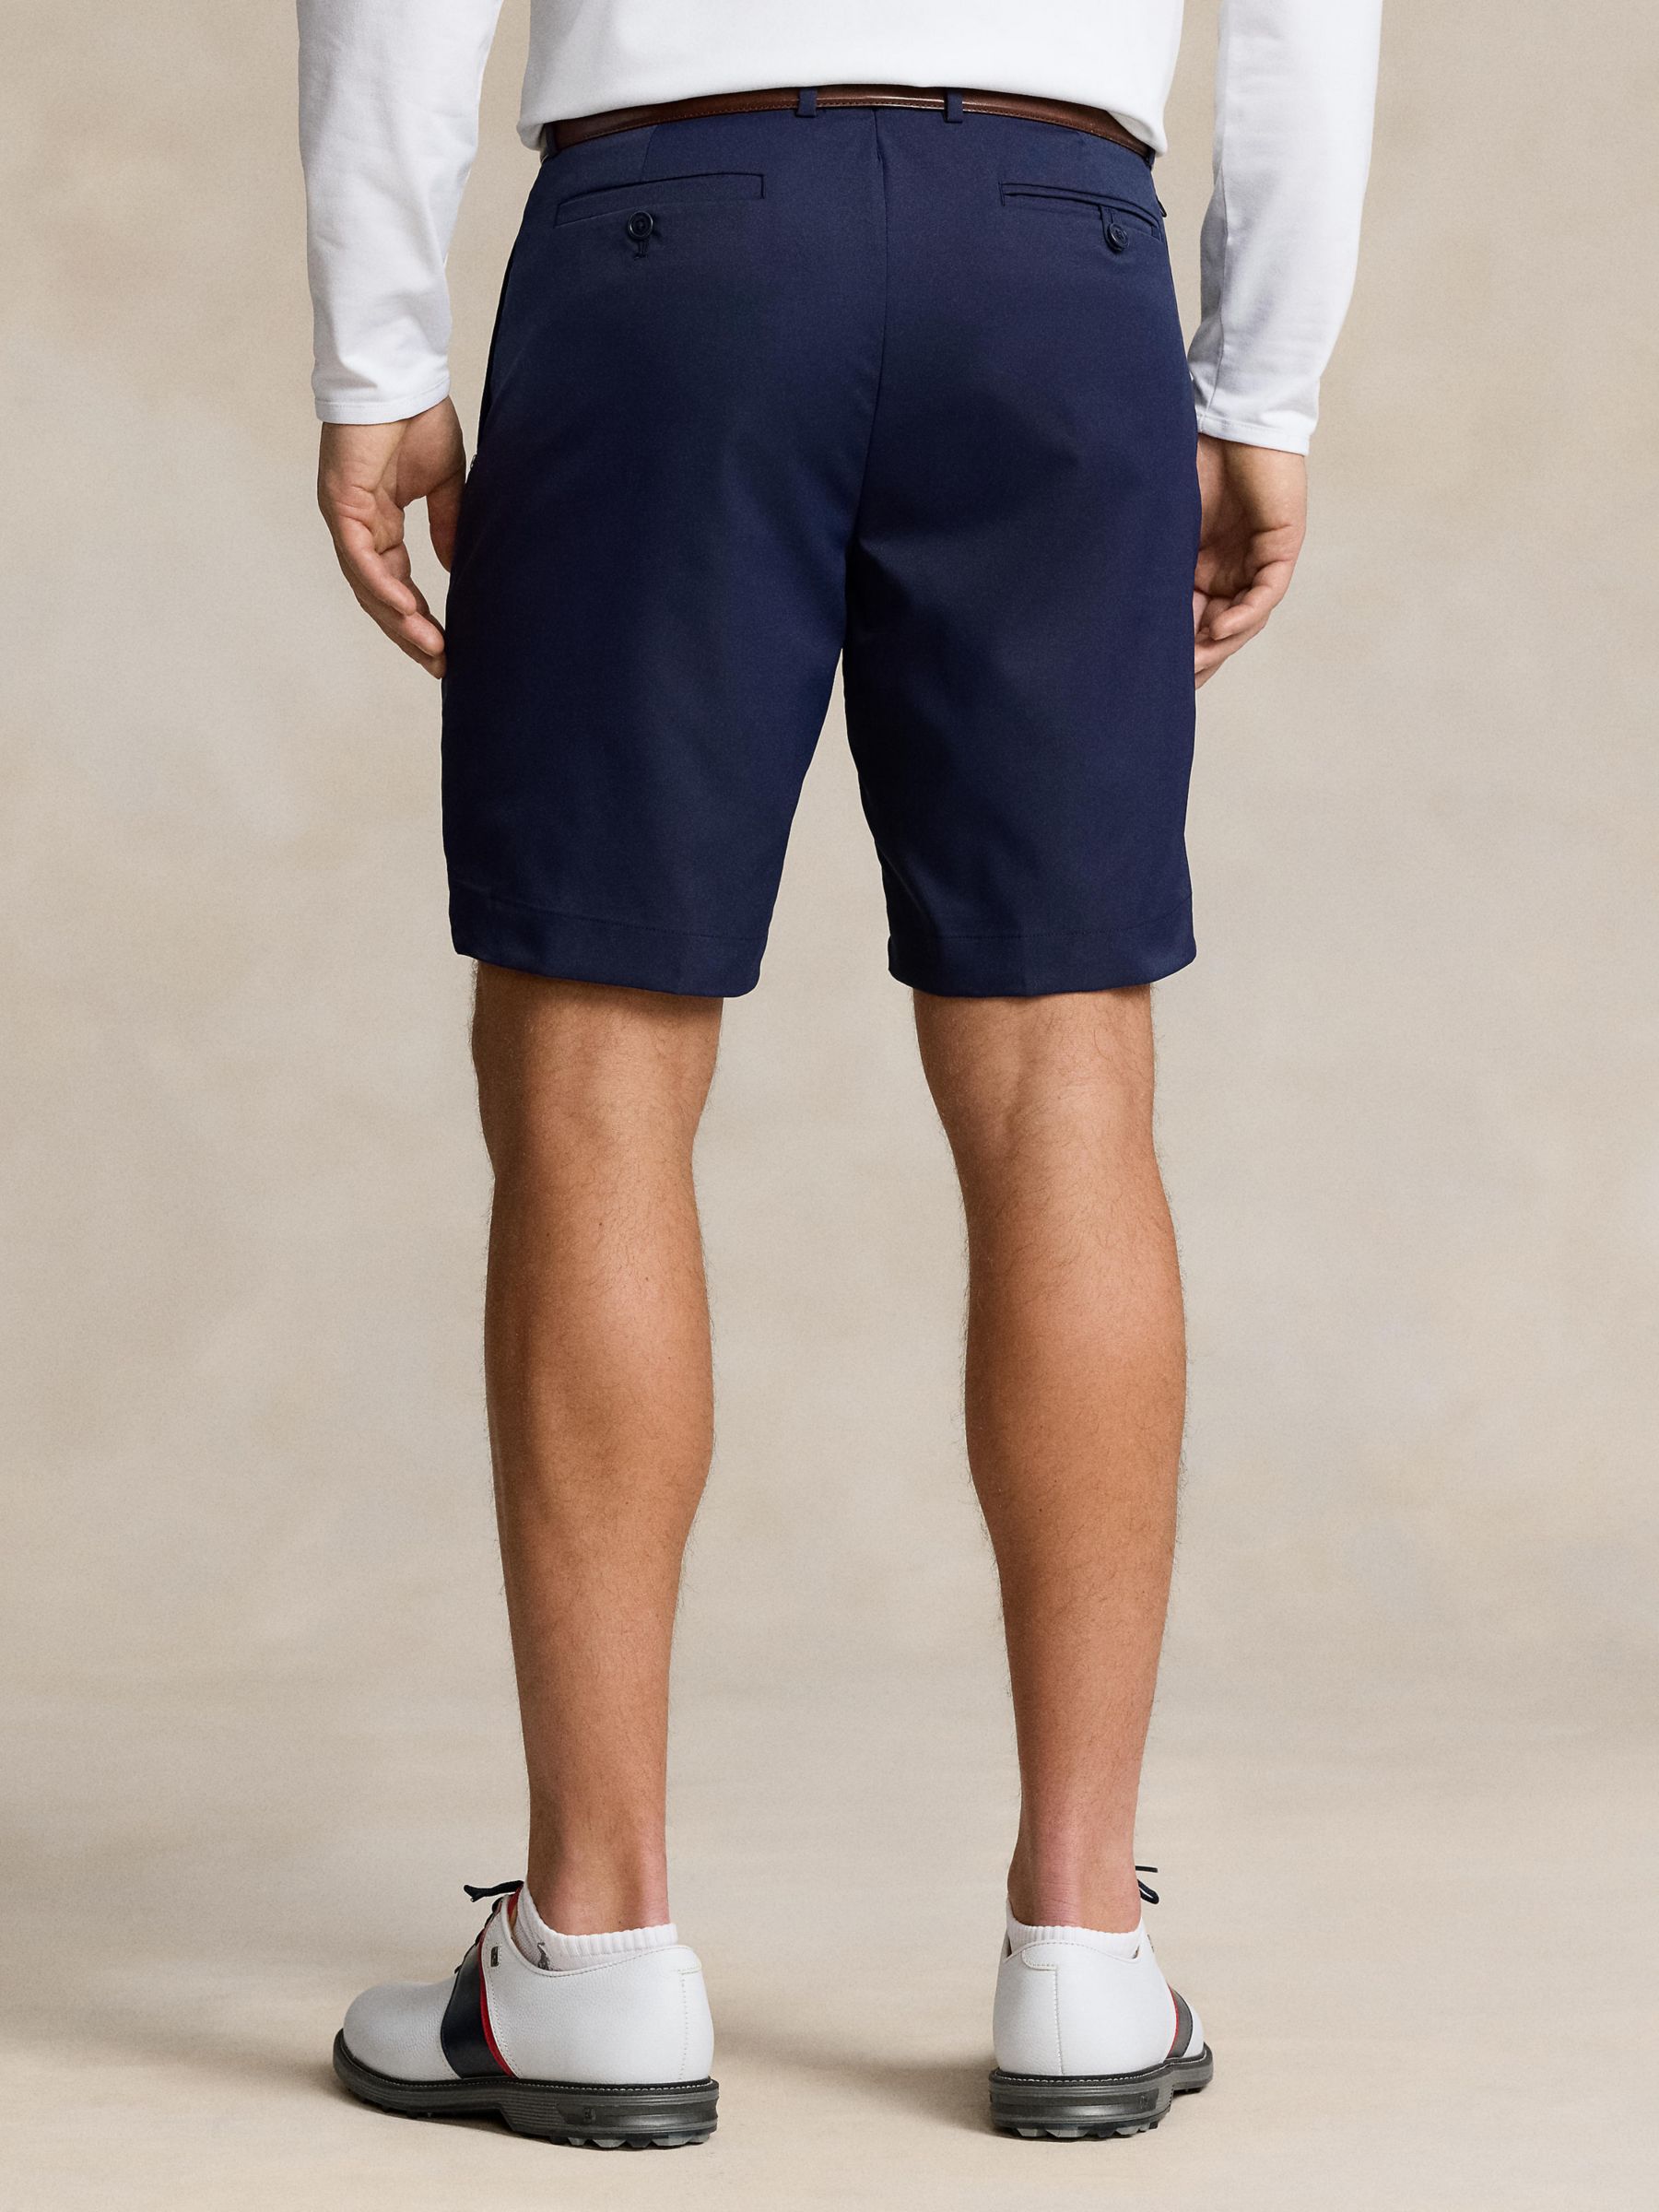 Ralph Lauren 9-Inch Tailored Fit Shorts, Navy, 30R